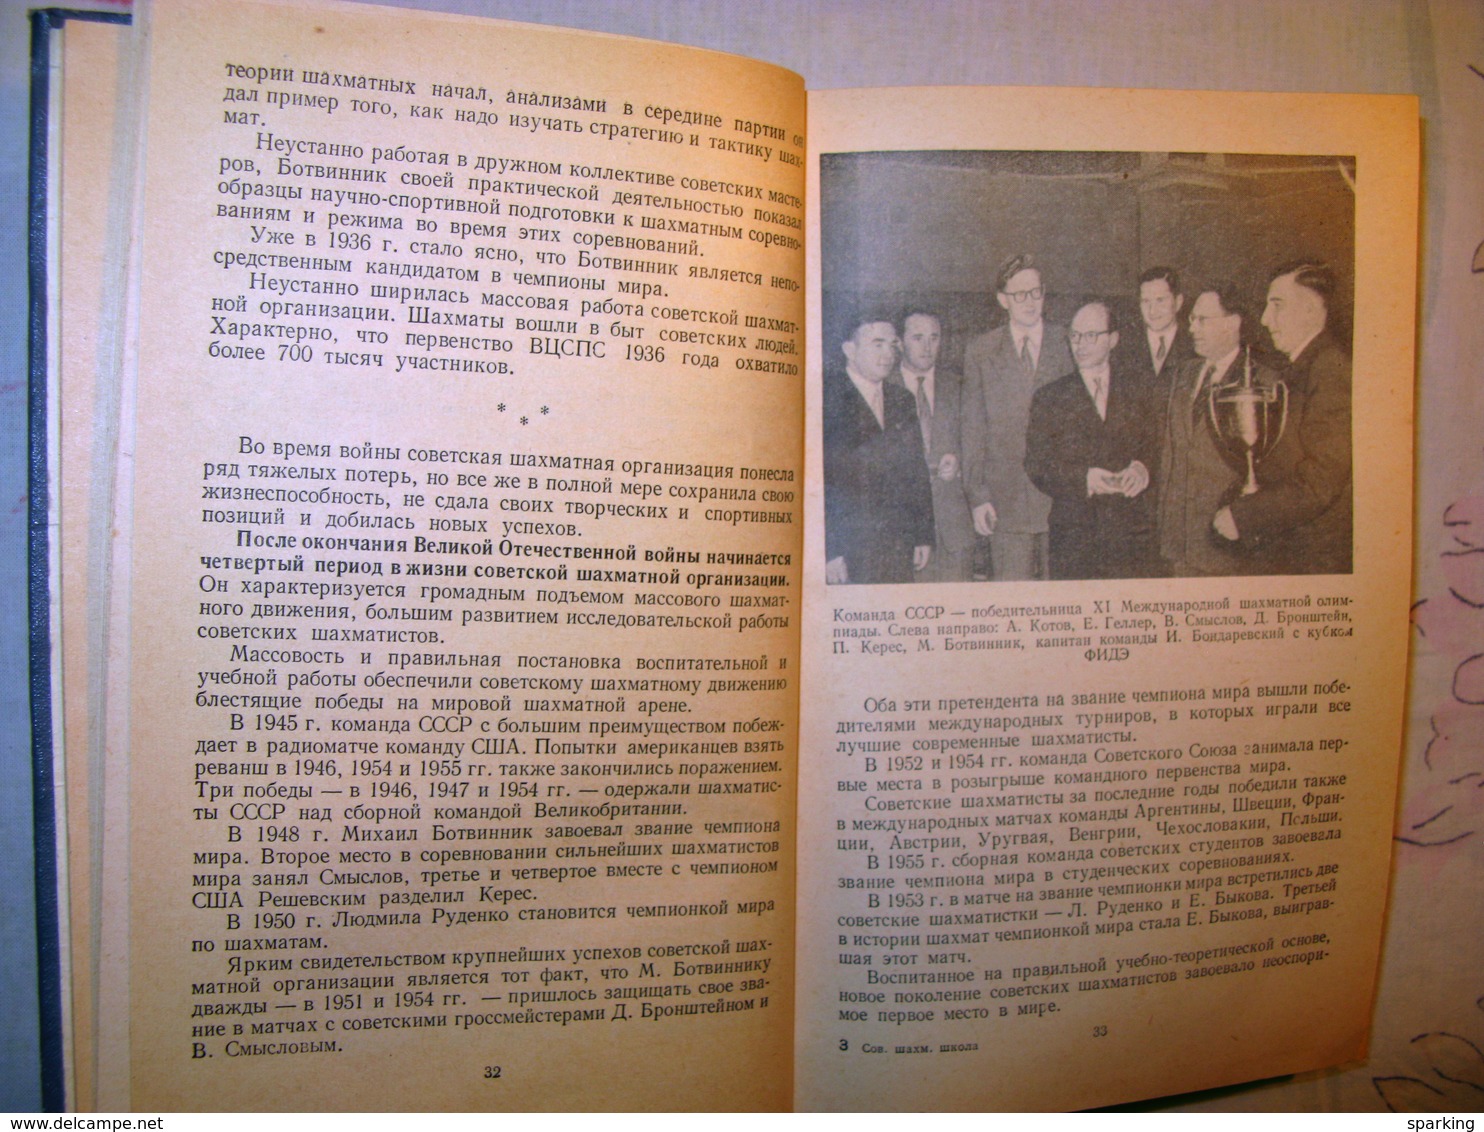 1955. Chess book. Soviet chess school. Authors Alexander Kotov, Mikhail Yudovich